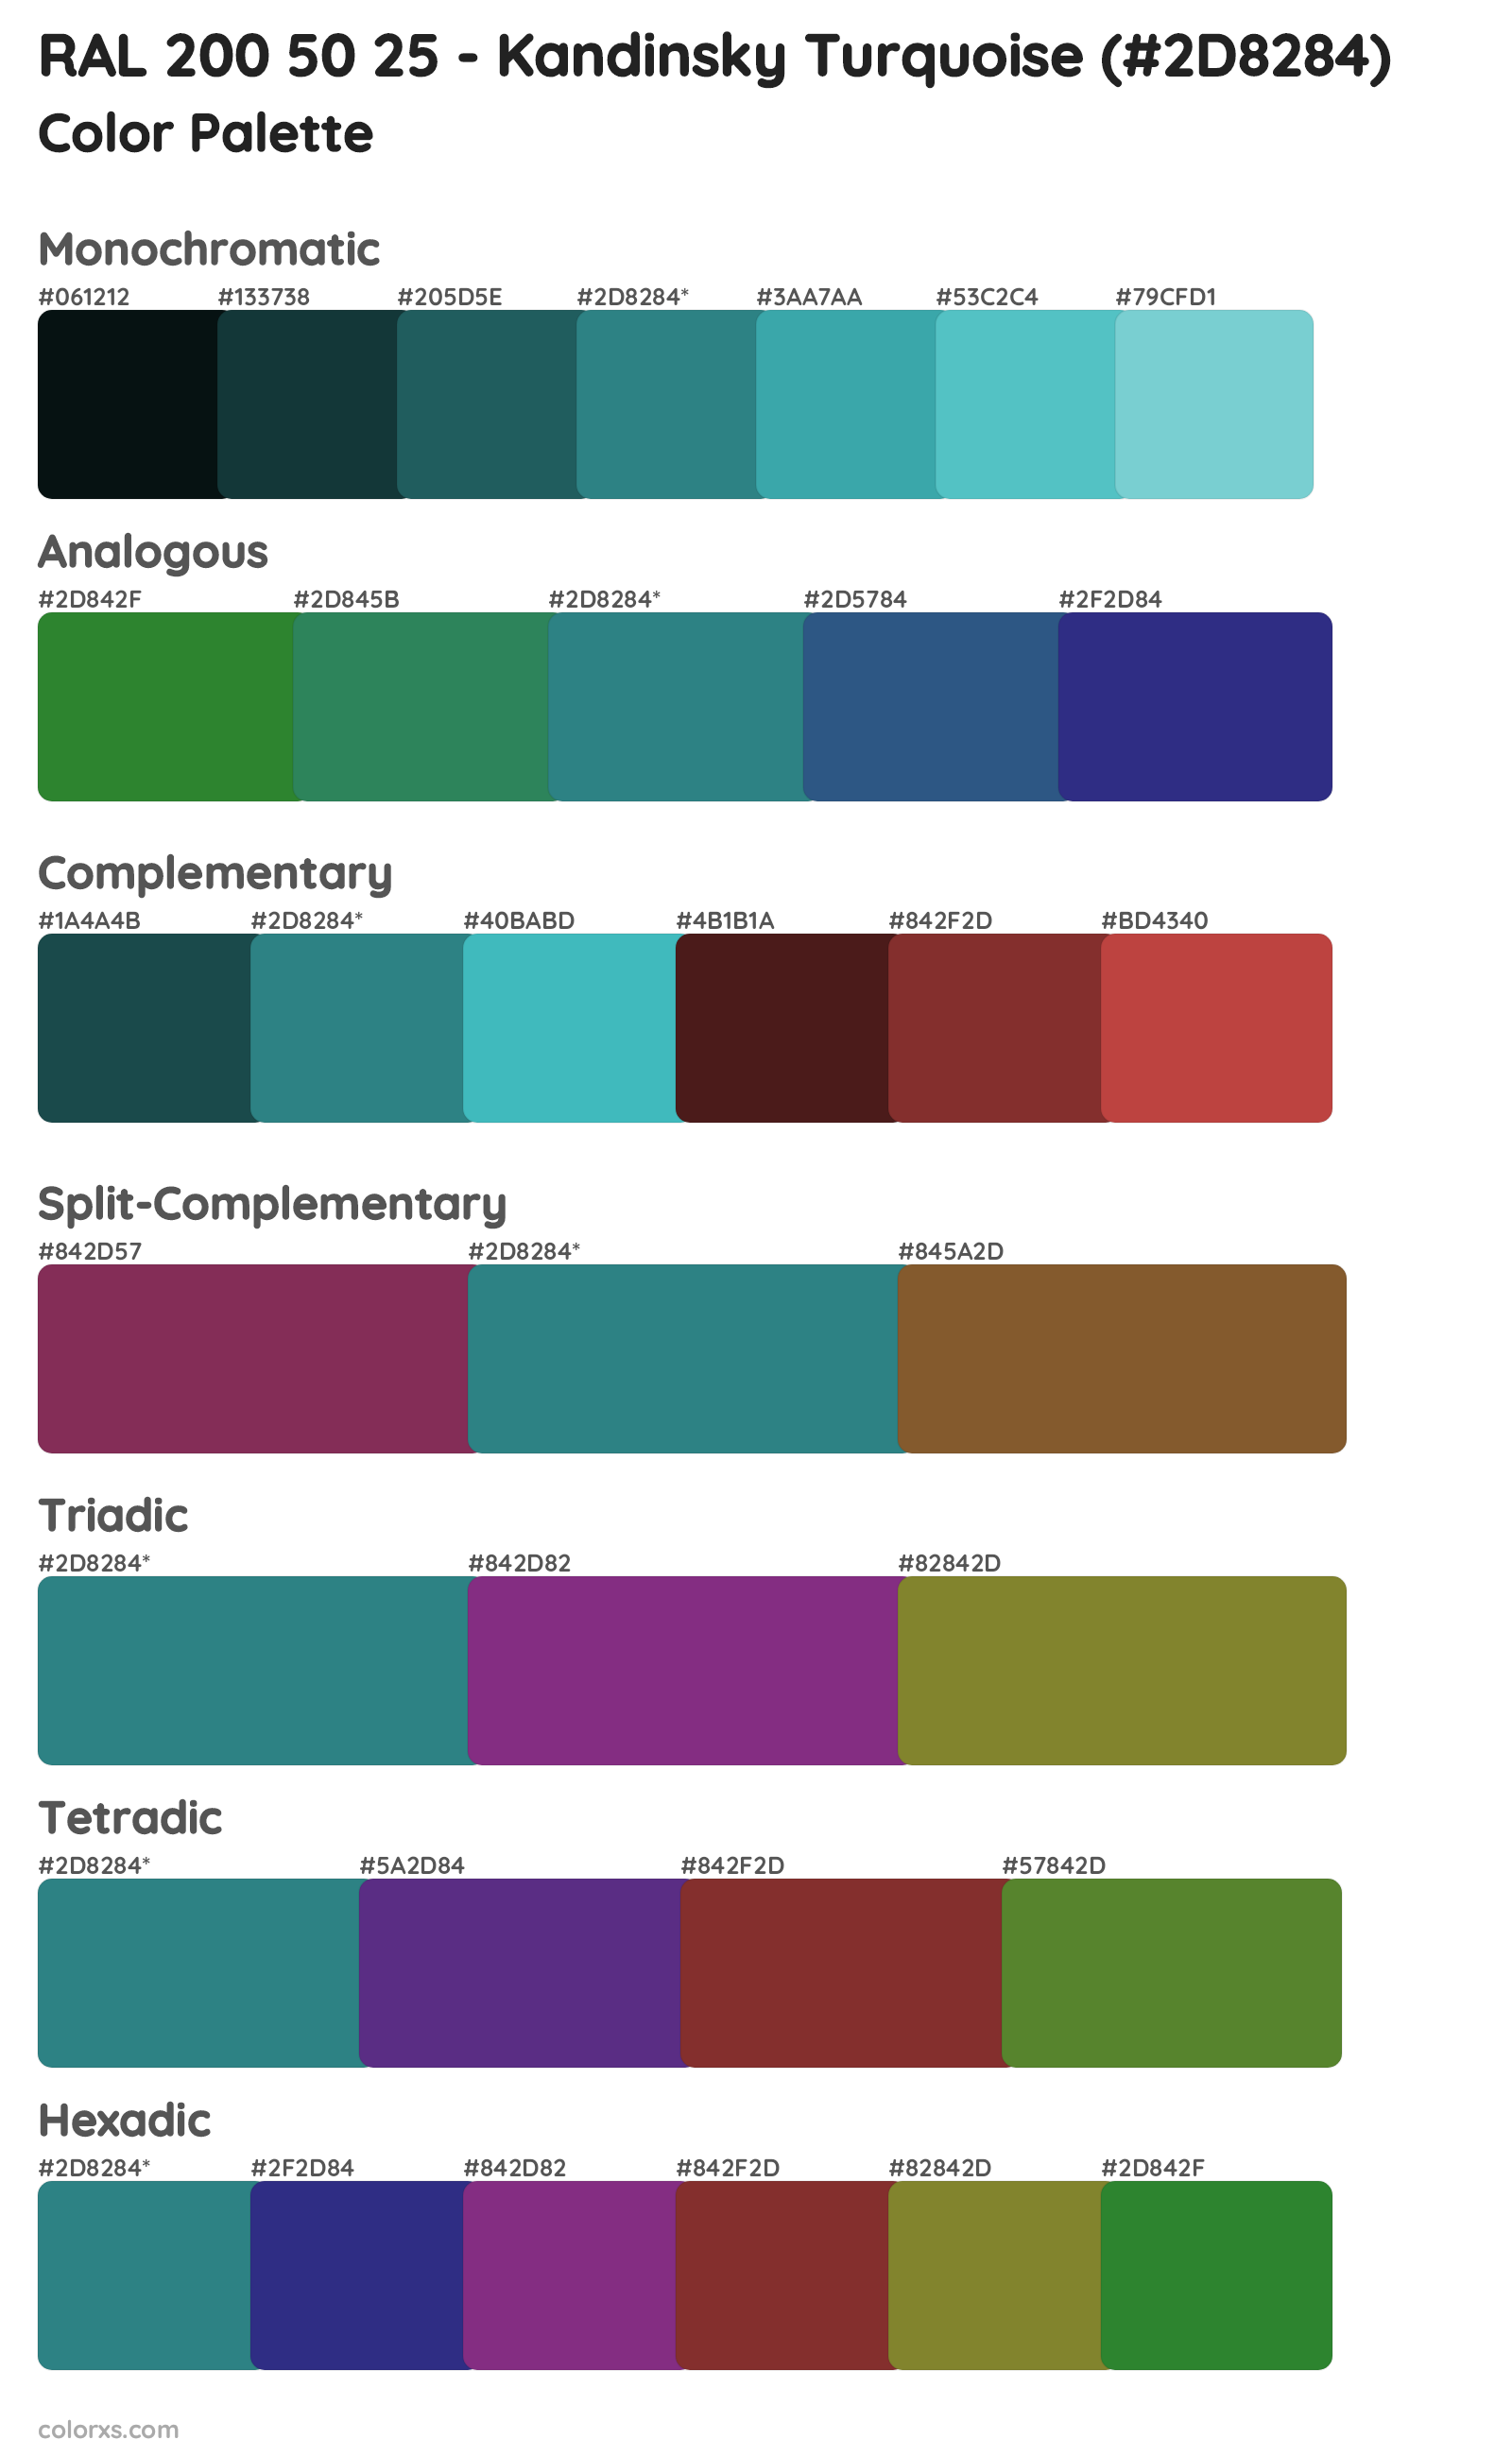 RAL 200 50 25 - Kandinsky Turquoise Color Scheme Palettes